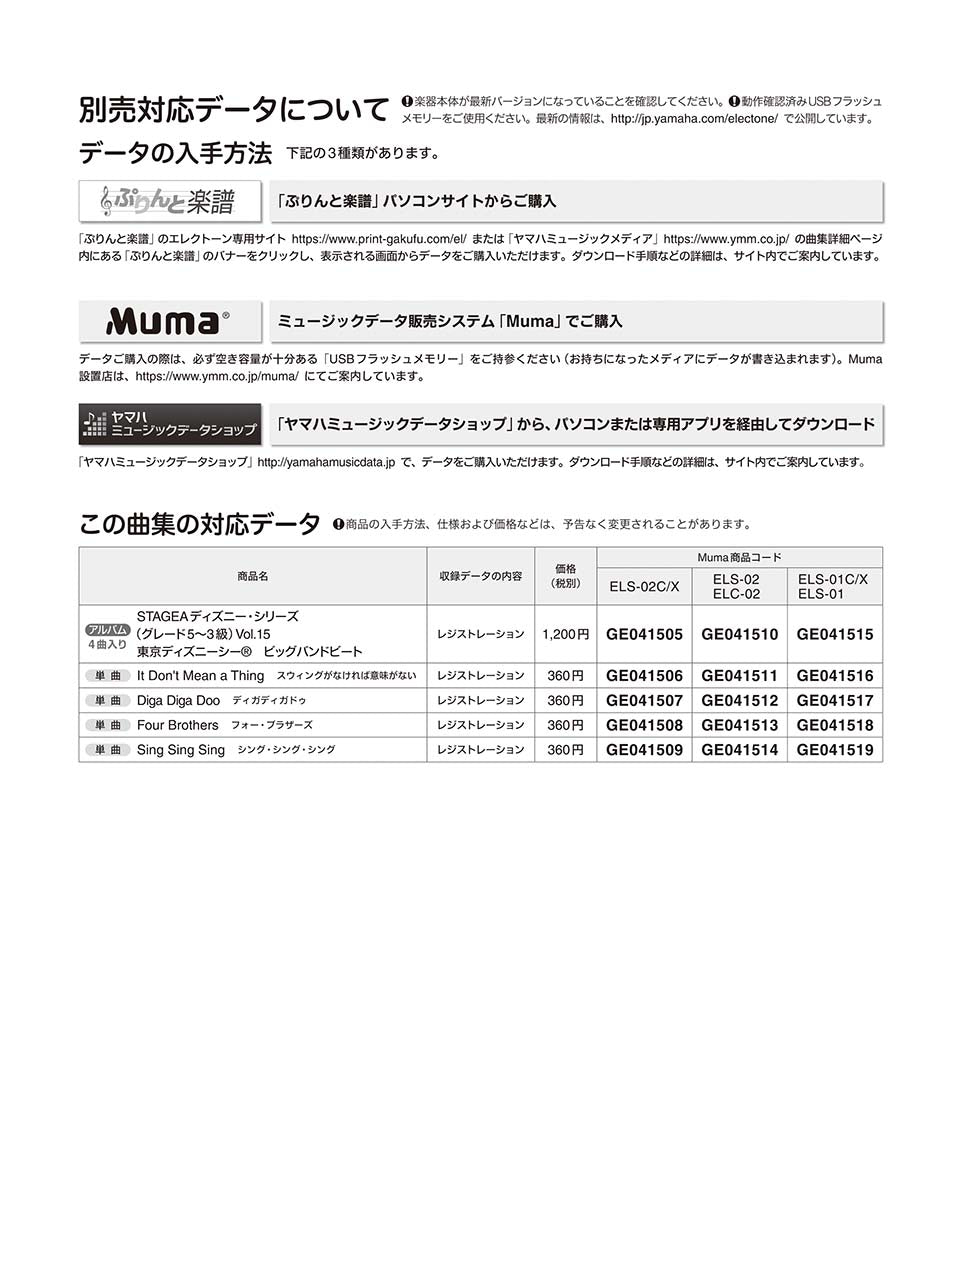 STAGEA ディズニー 5～3級 Vol.15 東京ディズニーシー(R) ビッグバンドビート_1